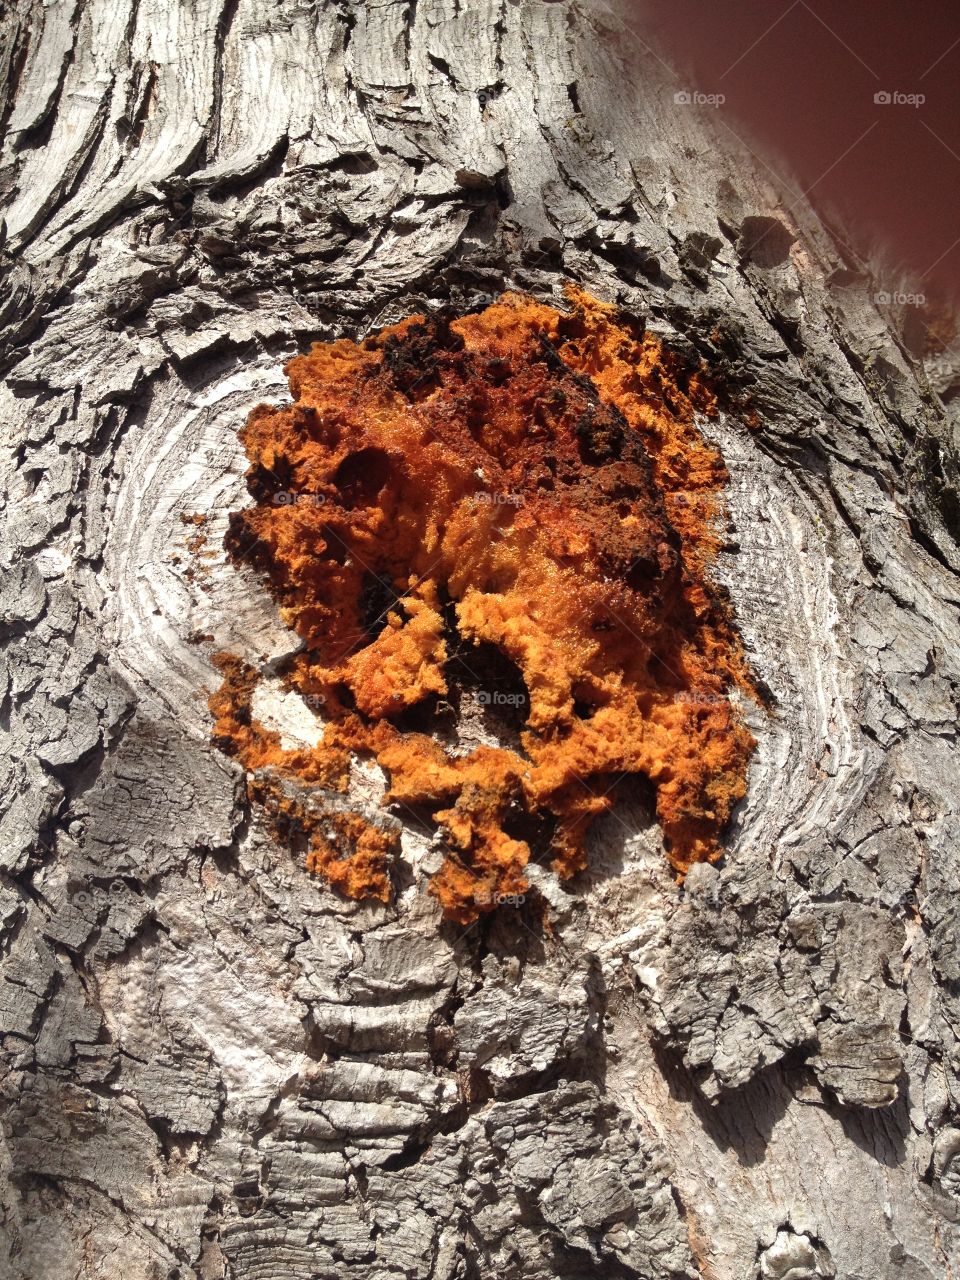 Intricacies . Knob of tree with orange fungi